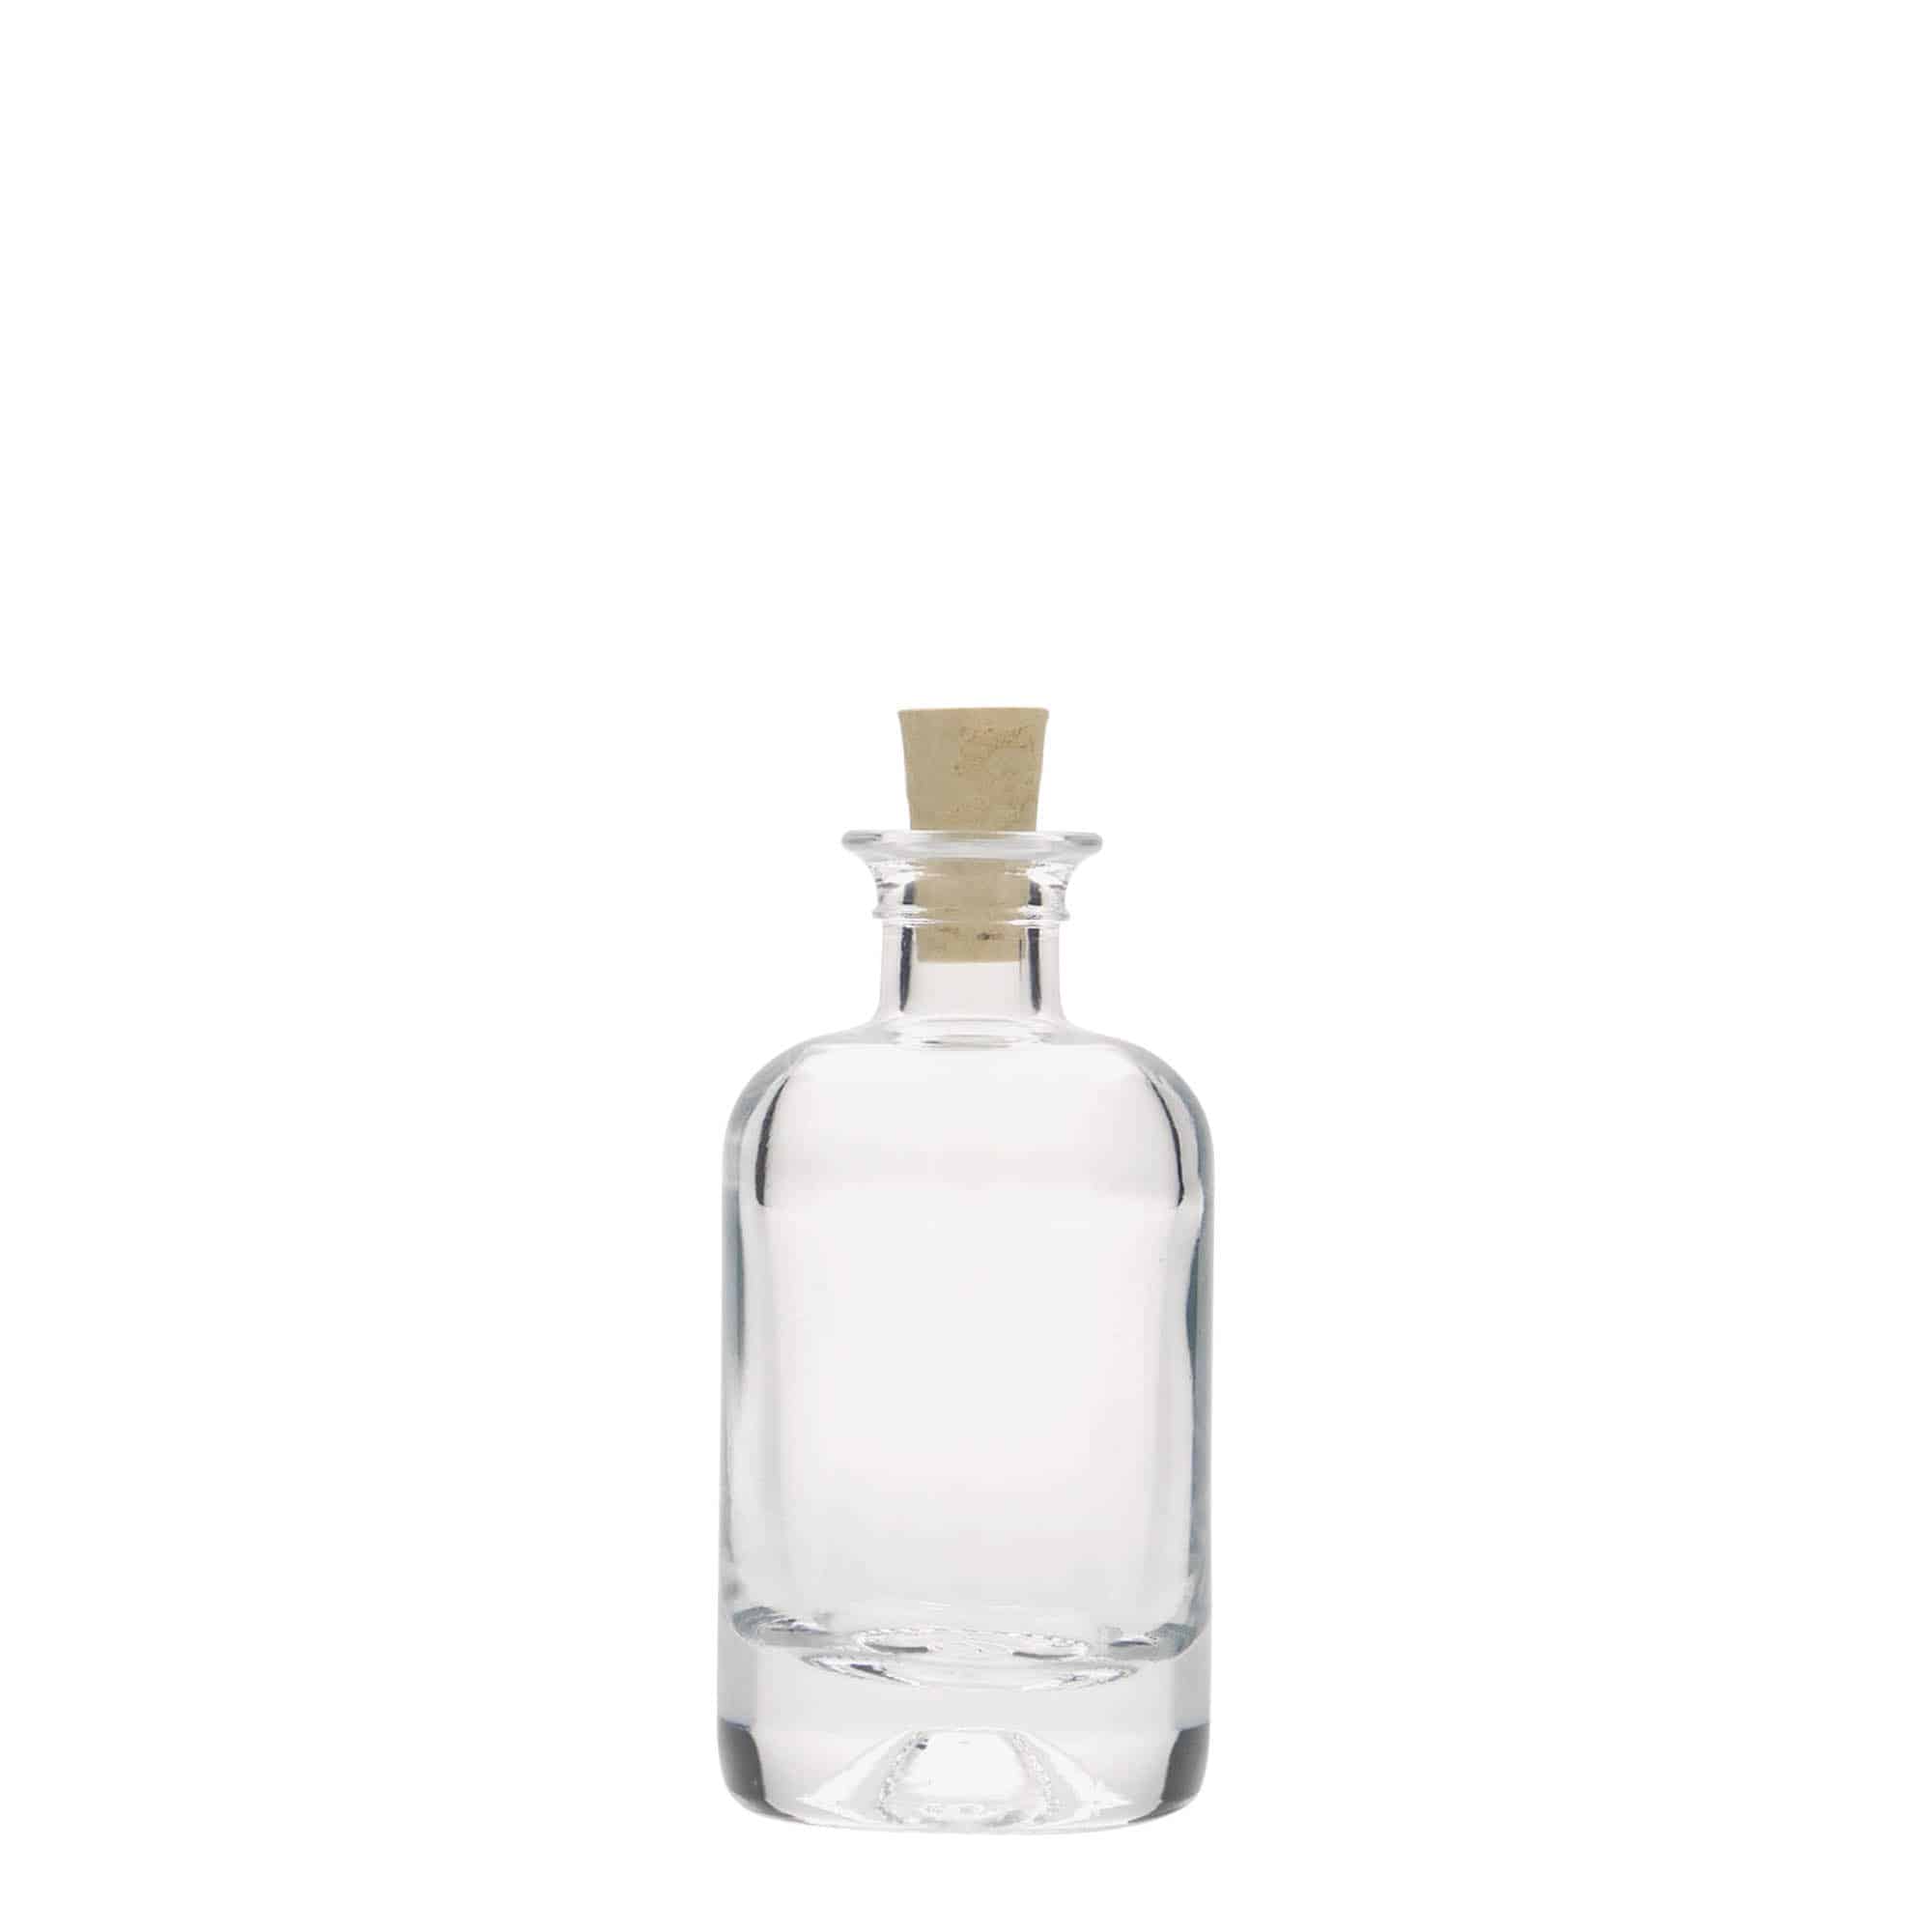 Skleněná lahev 40 ml lékárenská, uzávěr: korek